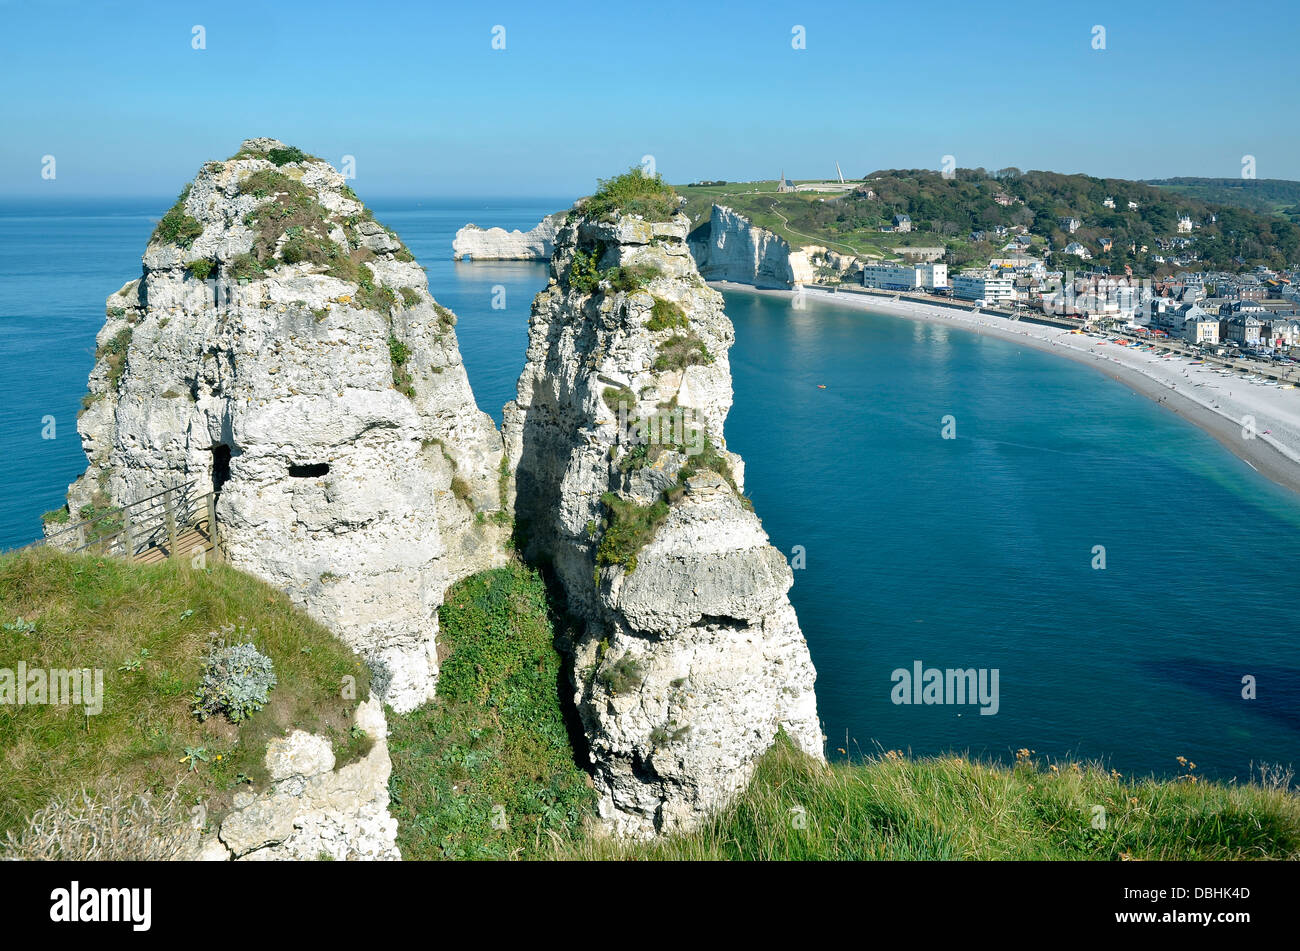 The two peaks of 'La chambre des demoiselles' on the famous cliffs of Etretat, commune in the Seine-Maritime department, France Stock Photo